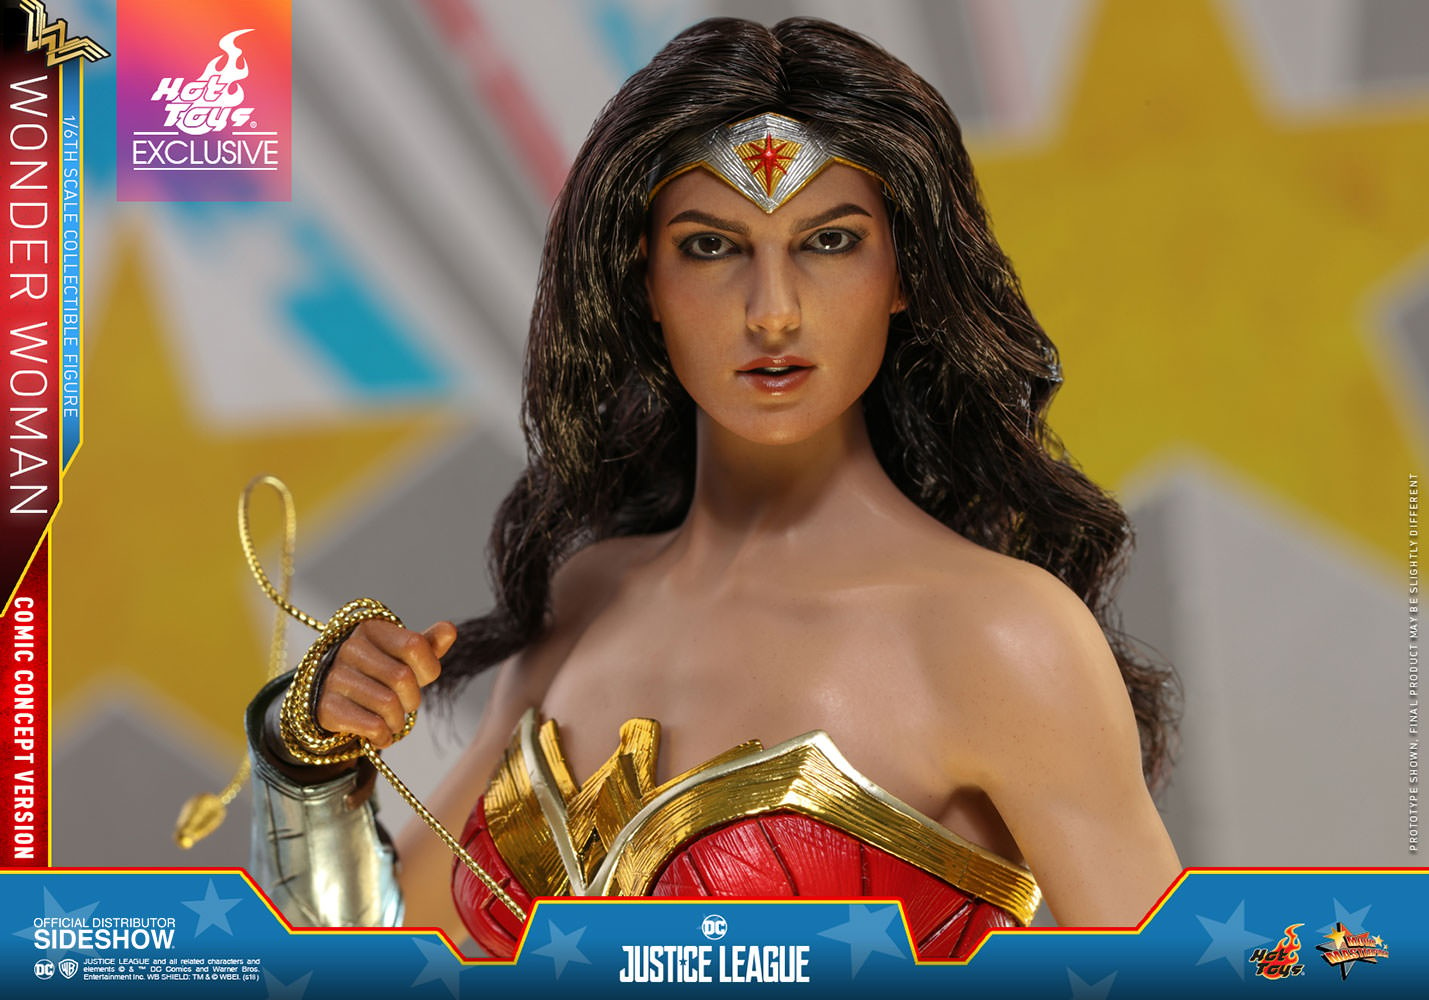 Wonder Woman Comic Concept Version Exclusive Edition (Prototype Shown) View 4